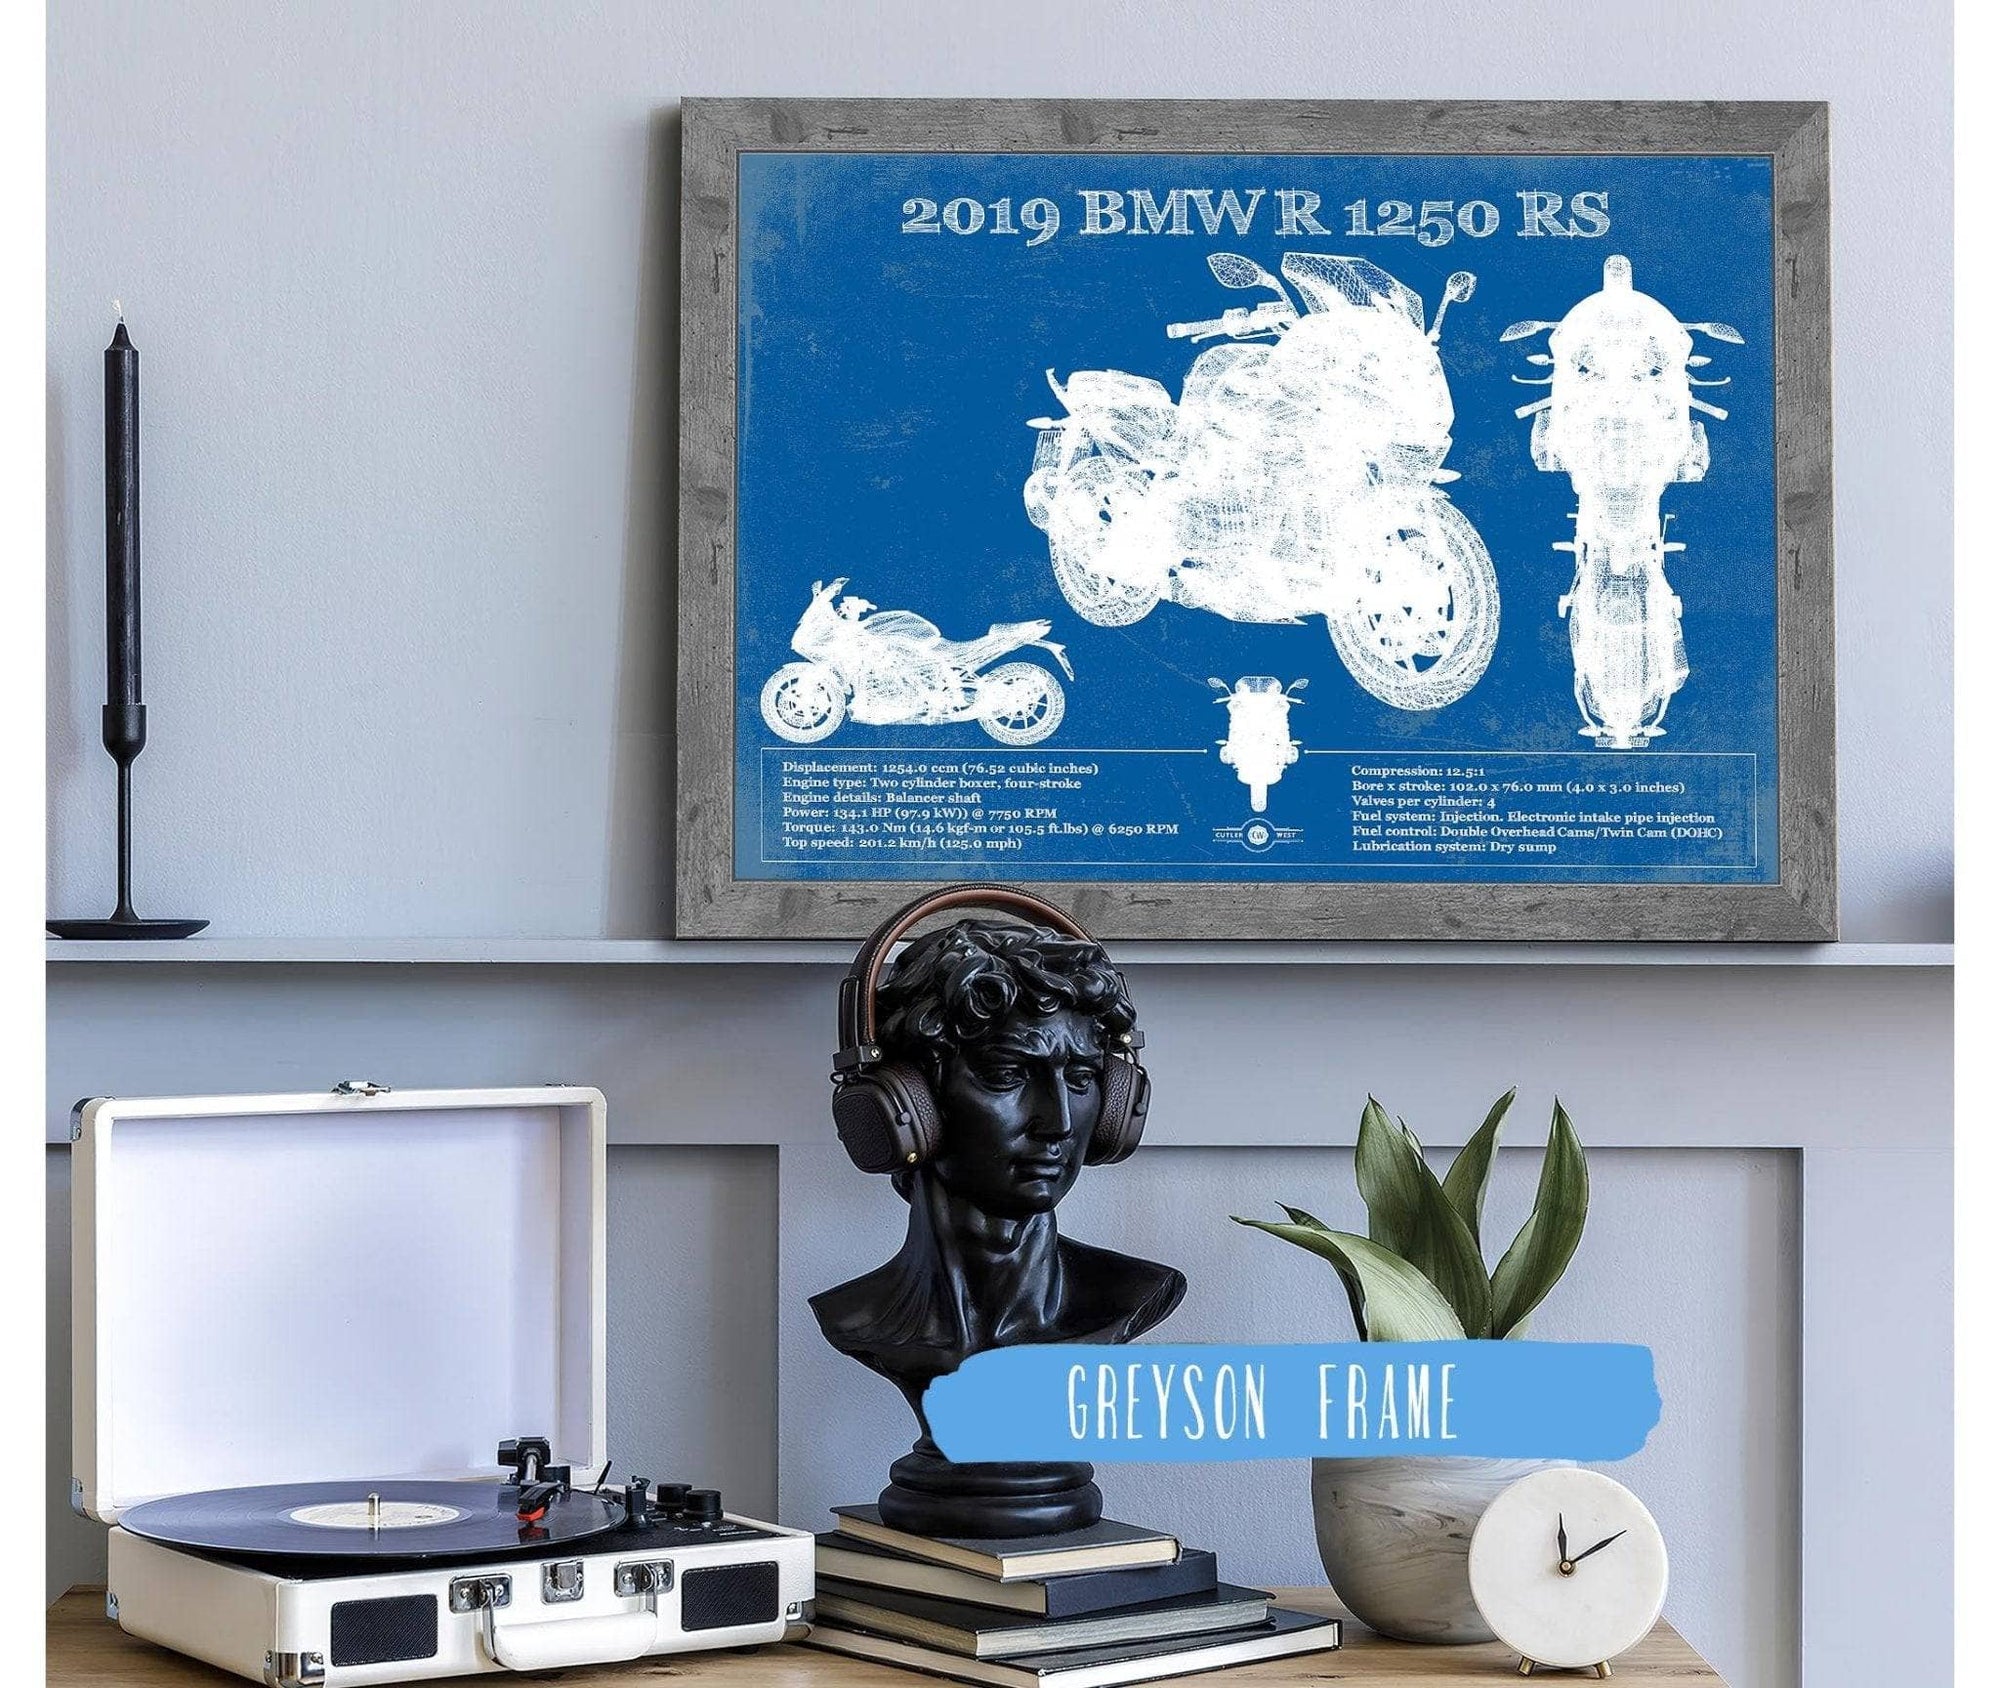 Cutler West Vehicle Collection 2019 BMW R1250RS Vintage Blueprint Auto Print